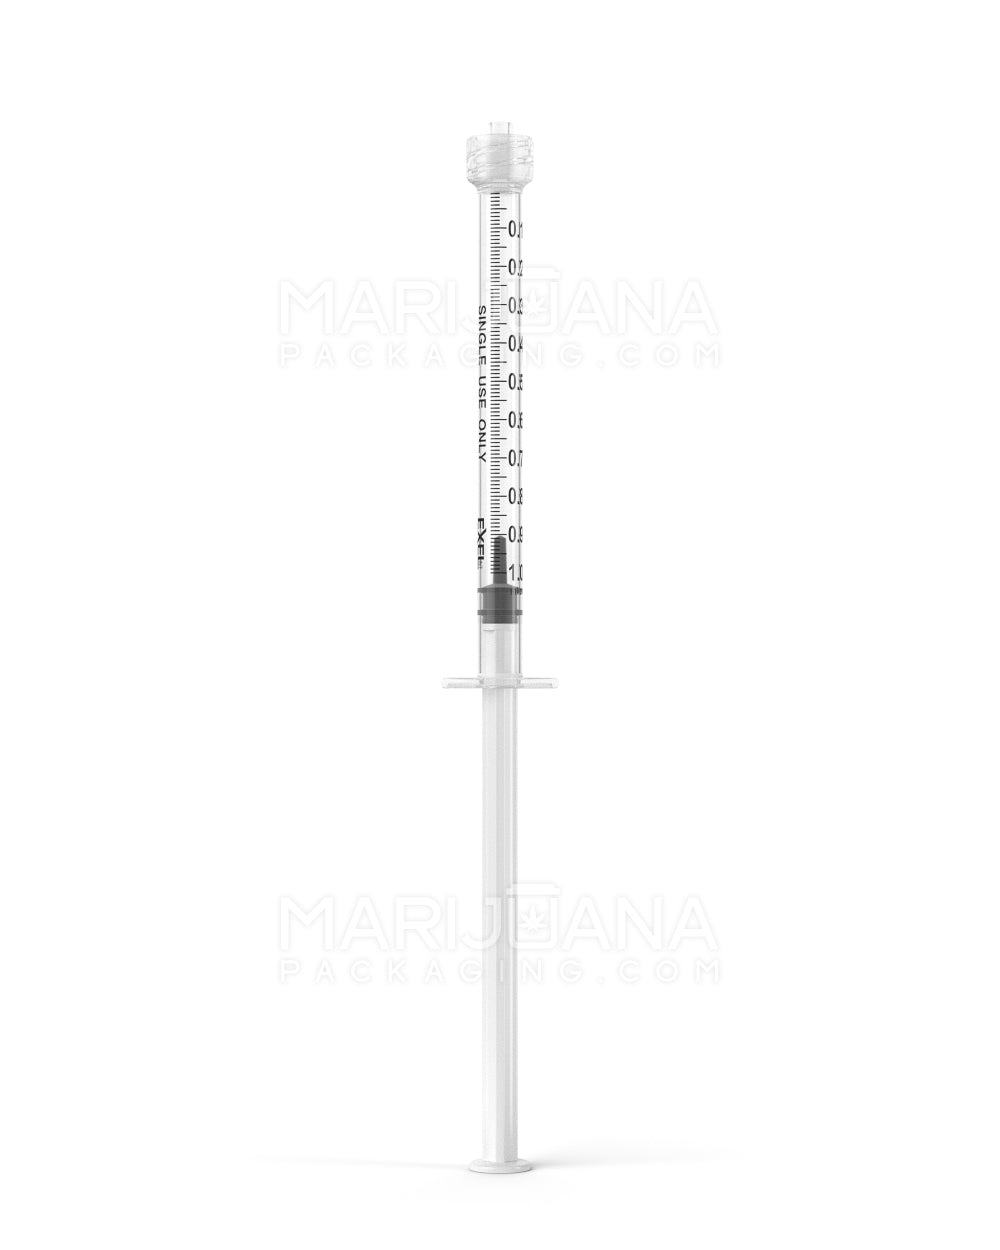 Luer Lock | Plastic Dab Applicator Syringes | 1mL - 0.1mL Increments - 100 Count - 1